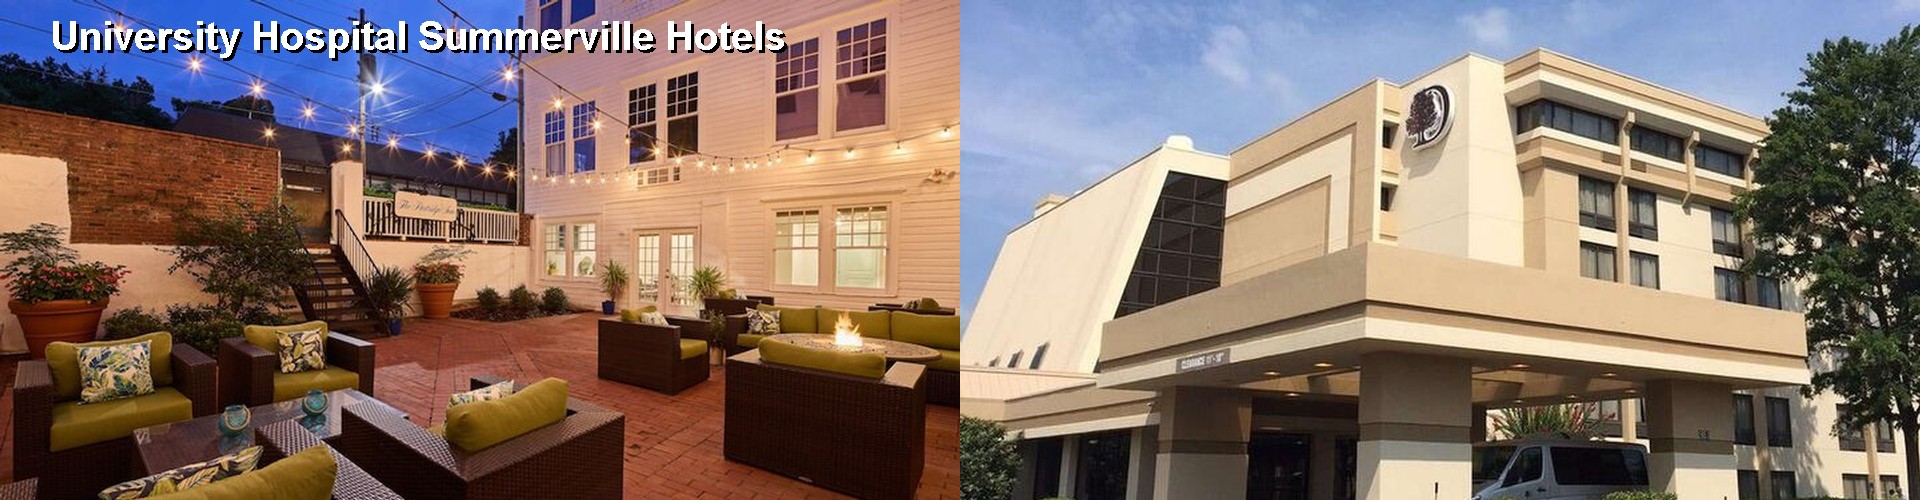 5 Best Hotels near University Hospital Summerville